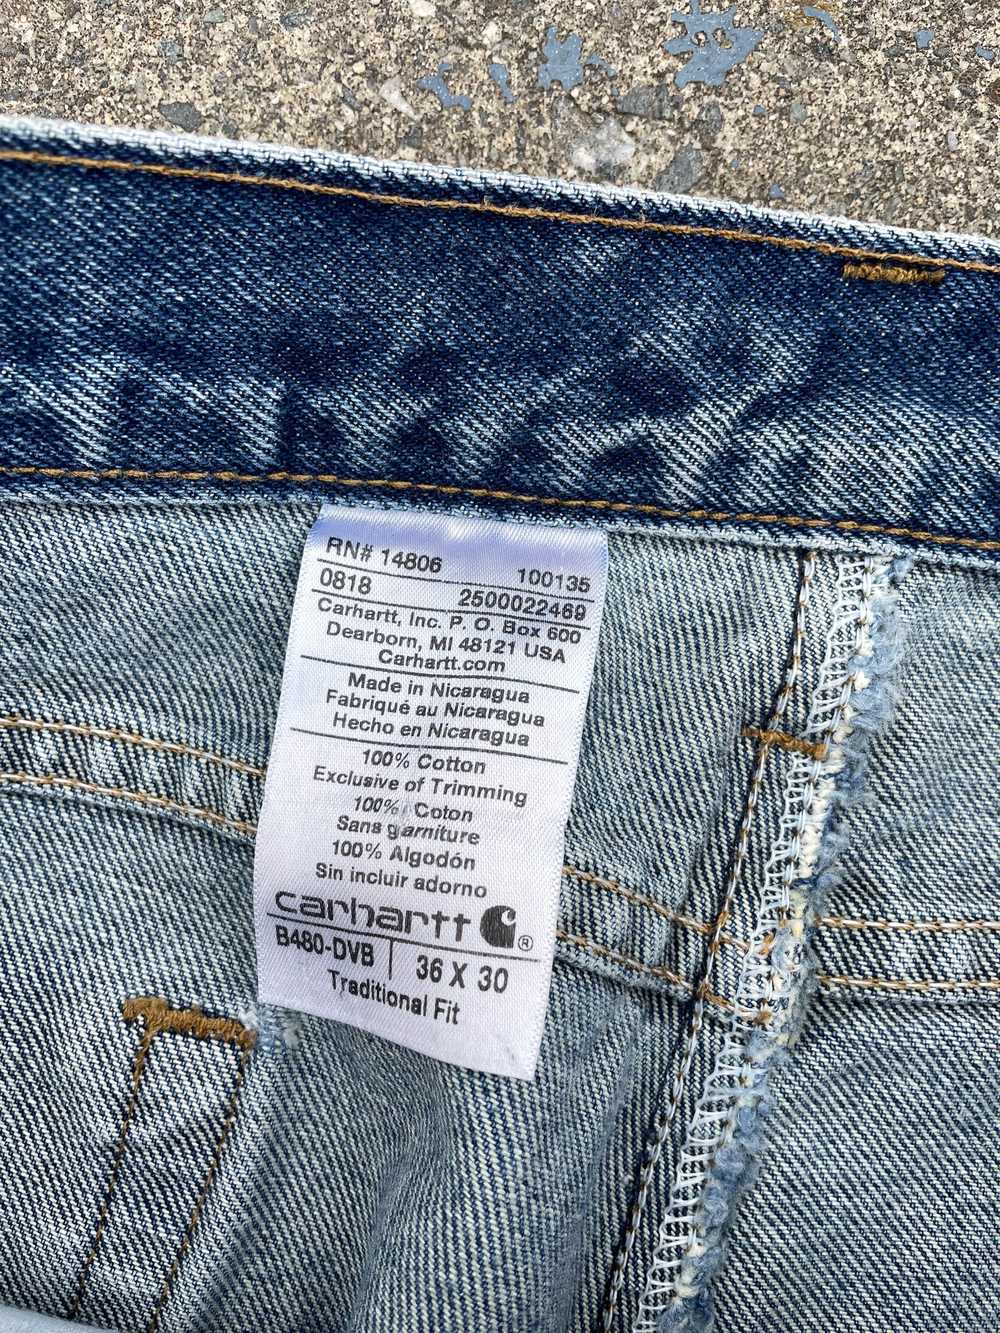 Carhartt Blue Jeans—[36x30] - image 3